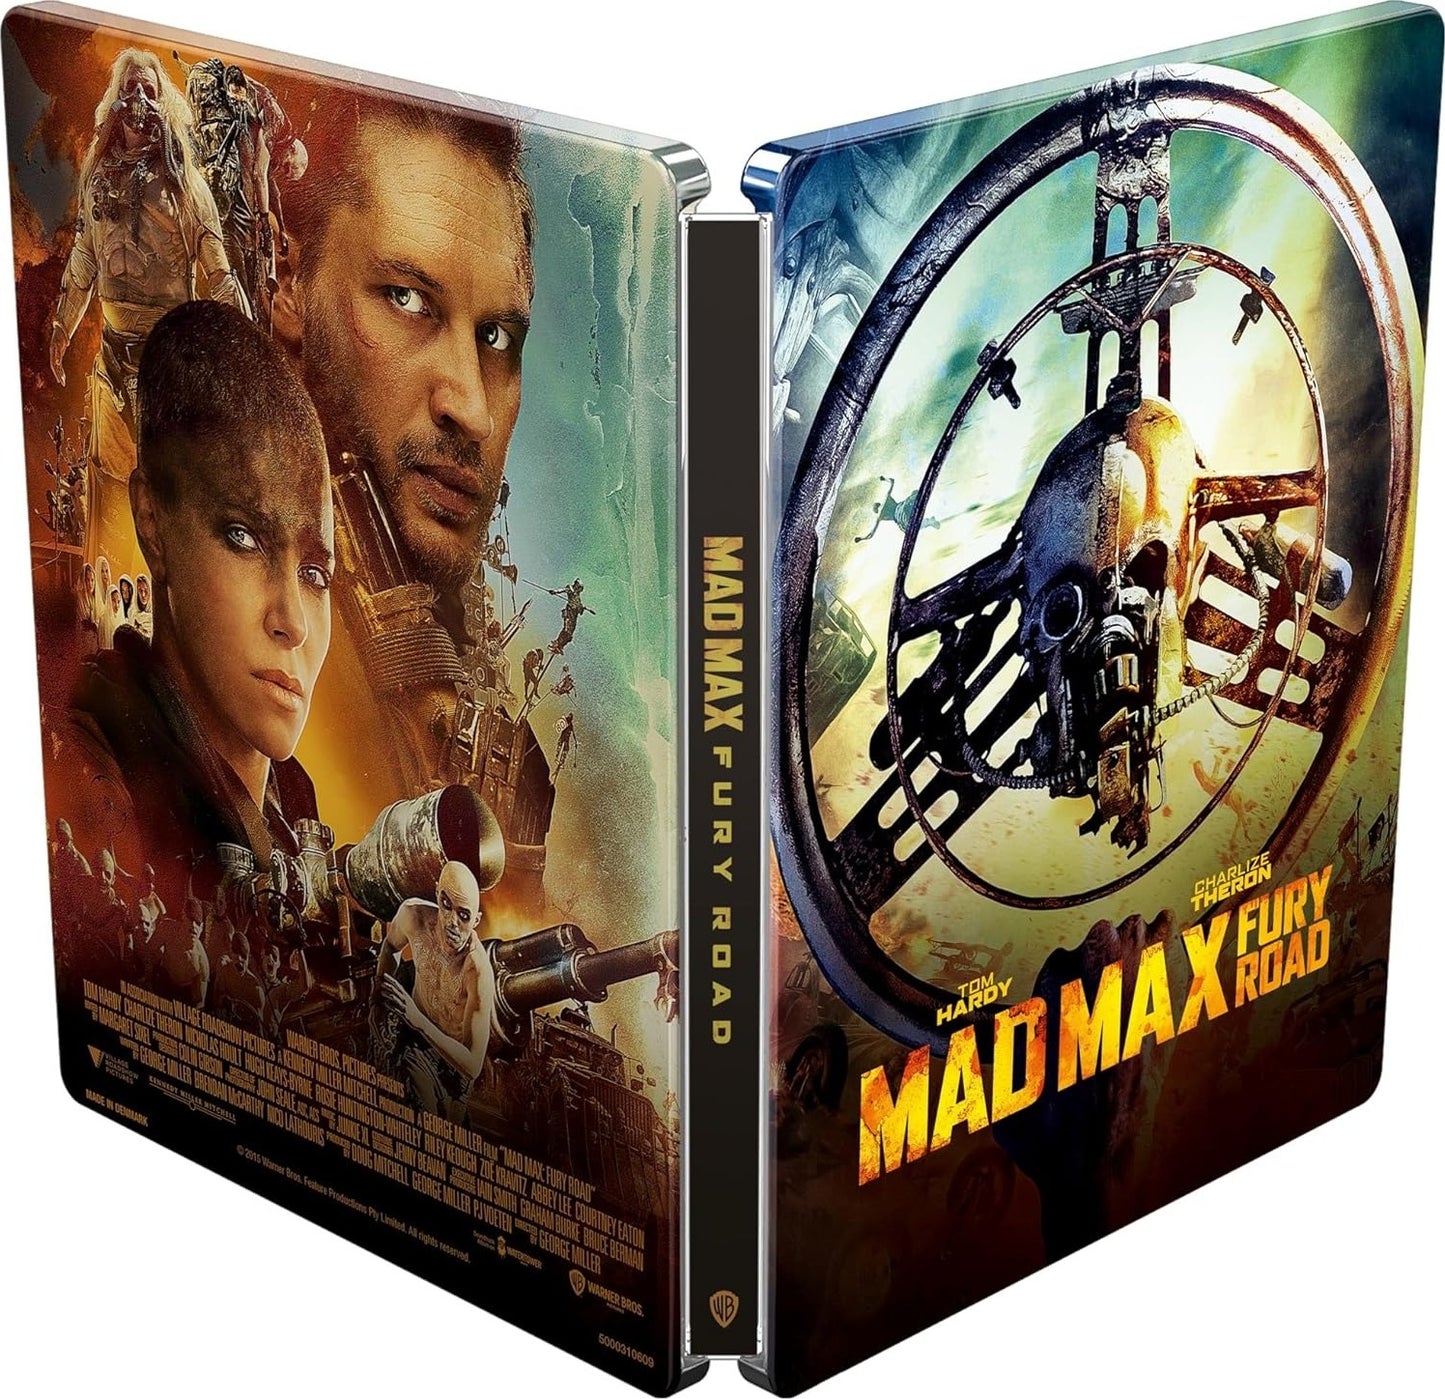 Mad Max Fury Road [Steelbook] [4K UHD] [UK]